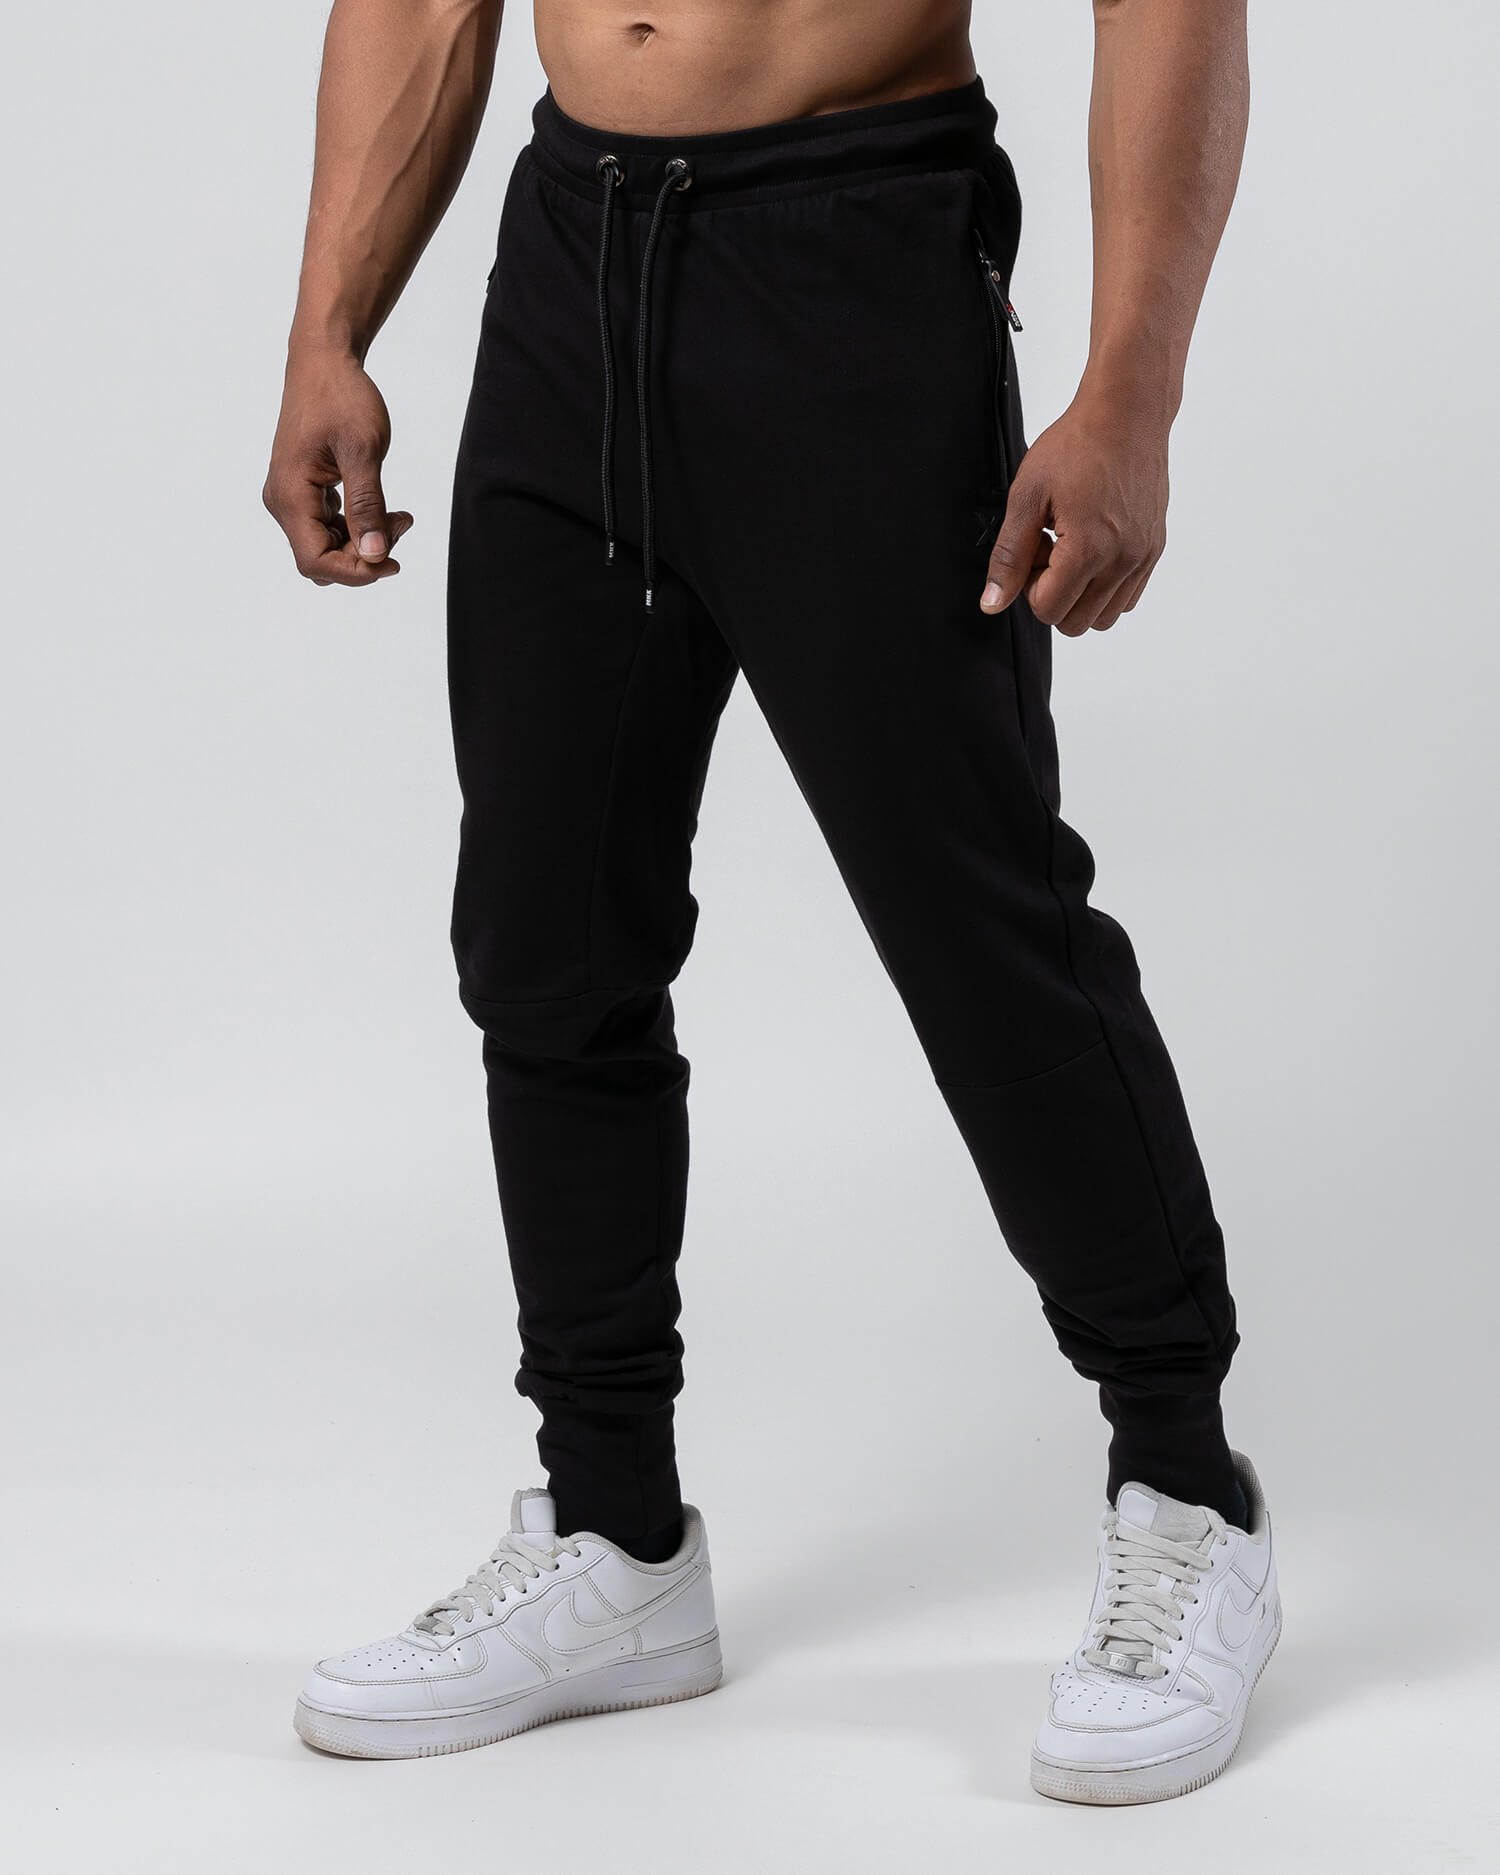 MNX Men's lightweight joggers Aesthetic, black - MNX Sportswear